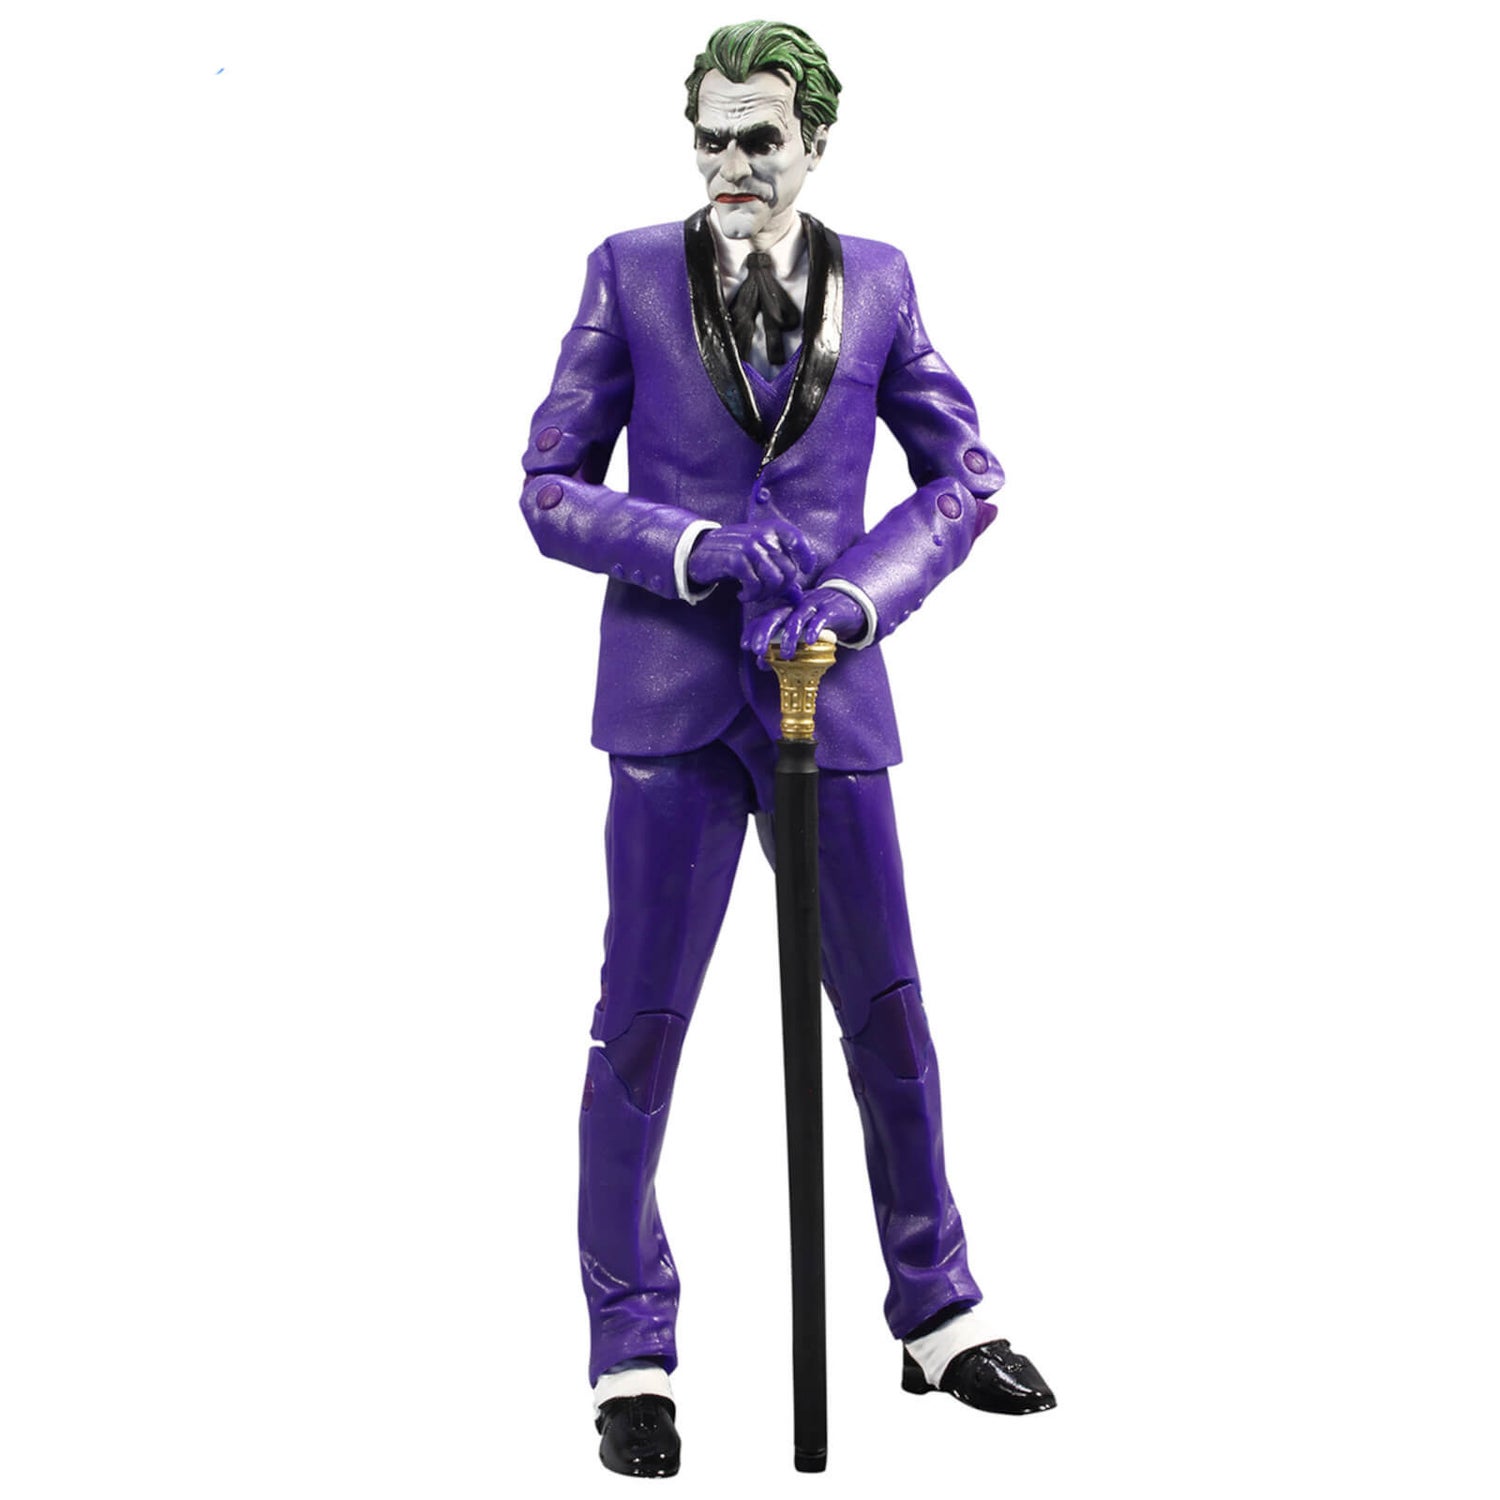 McFarlane DC Multiverse Batman: Three Jokers 7 Inch Action Figure - The Joker: The Criminal